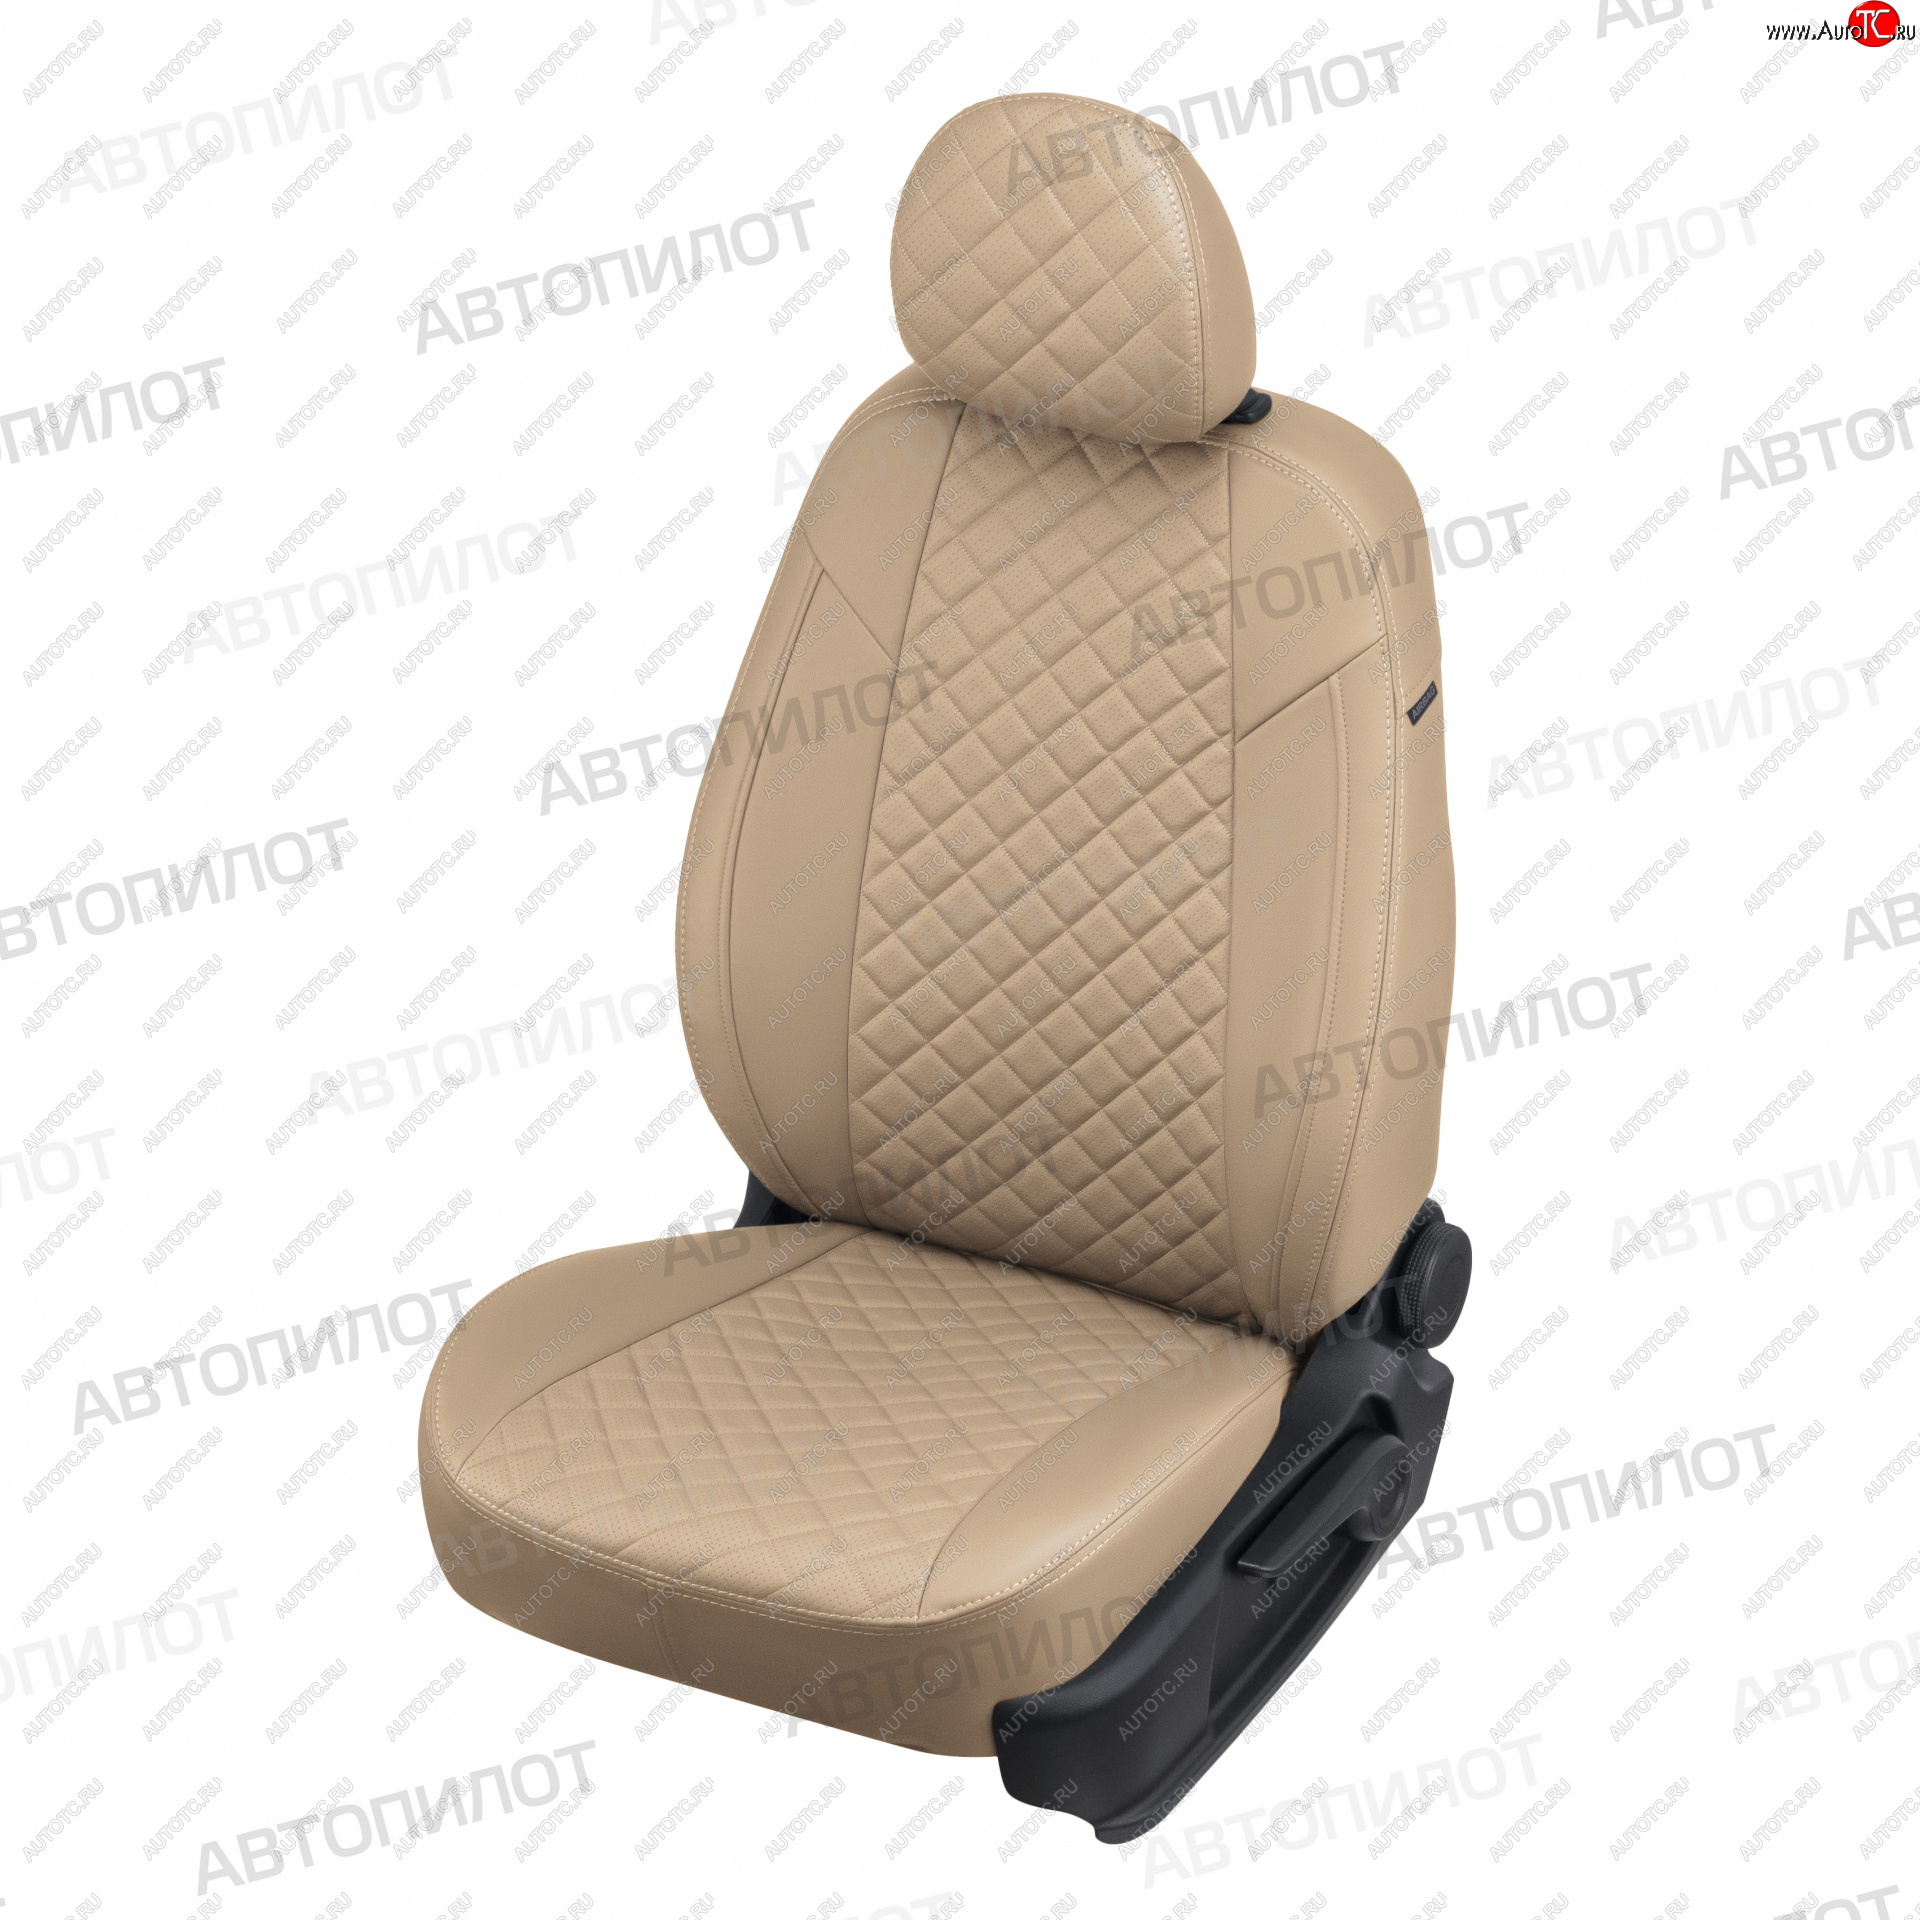 14 499 р. Чехлы сидений (Titanium, экокожа) Автопилот Ромб  Ford Mondeo  MK5 CD391 (2014-2024) (темно-бежевый)